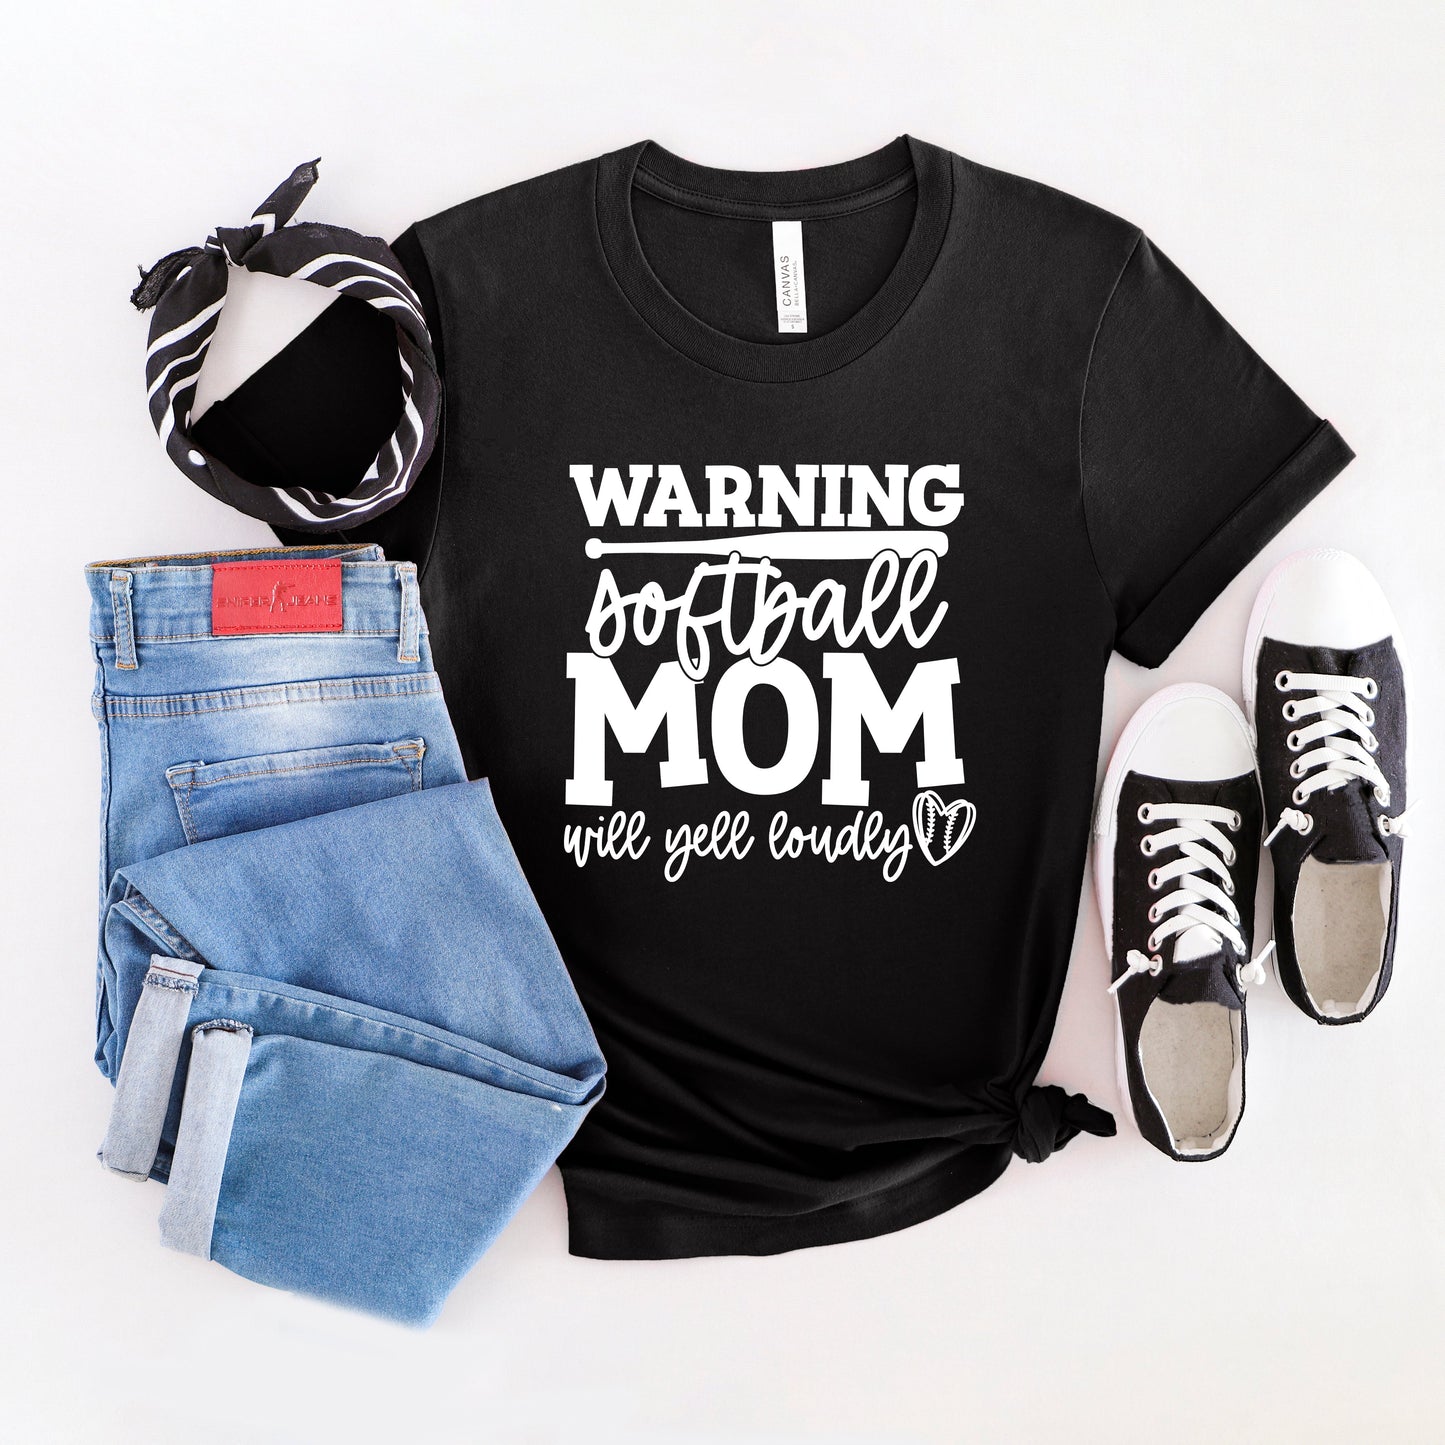 Warning Softball Mom | Short Sleeve Graphic Tee